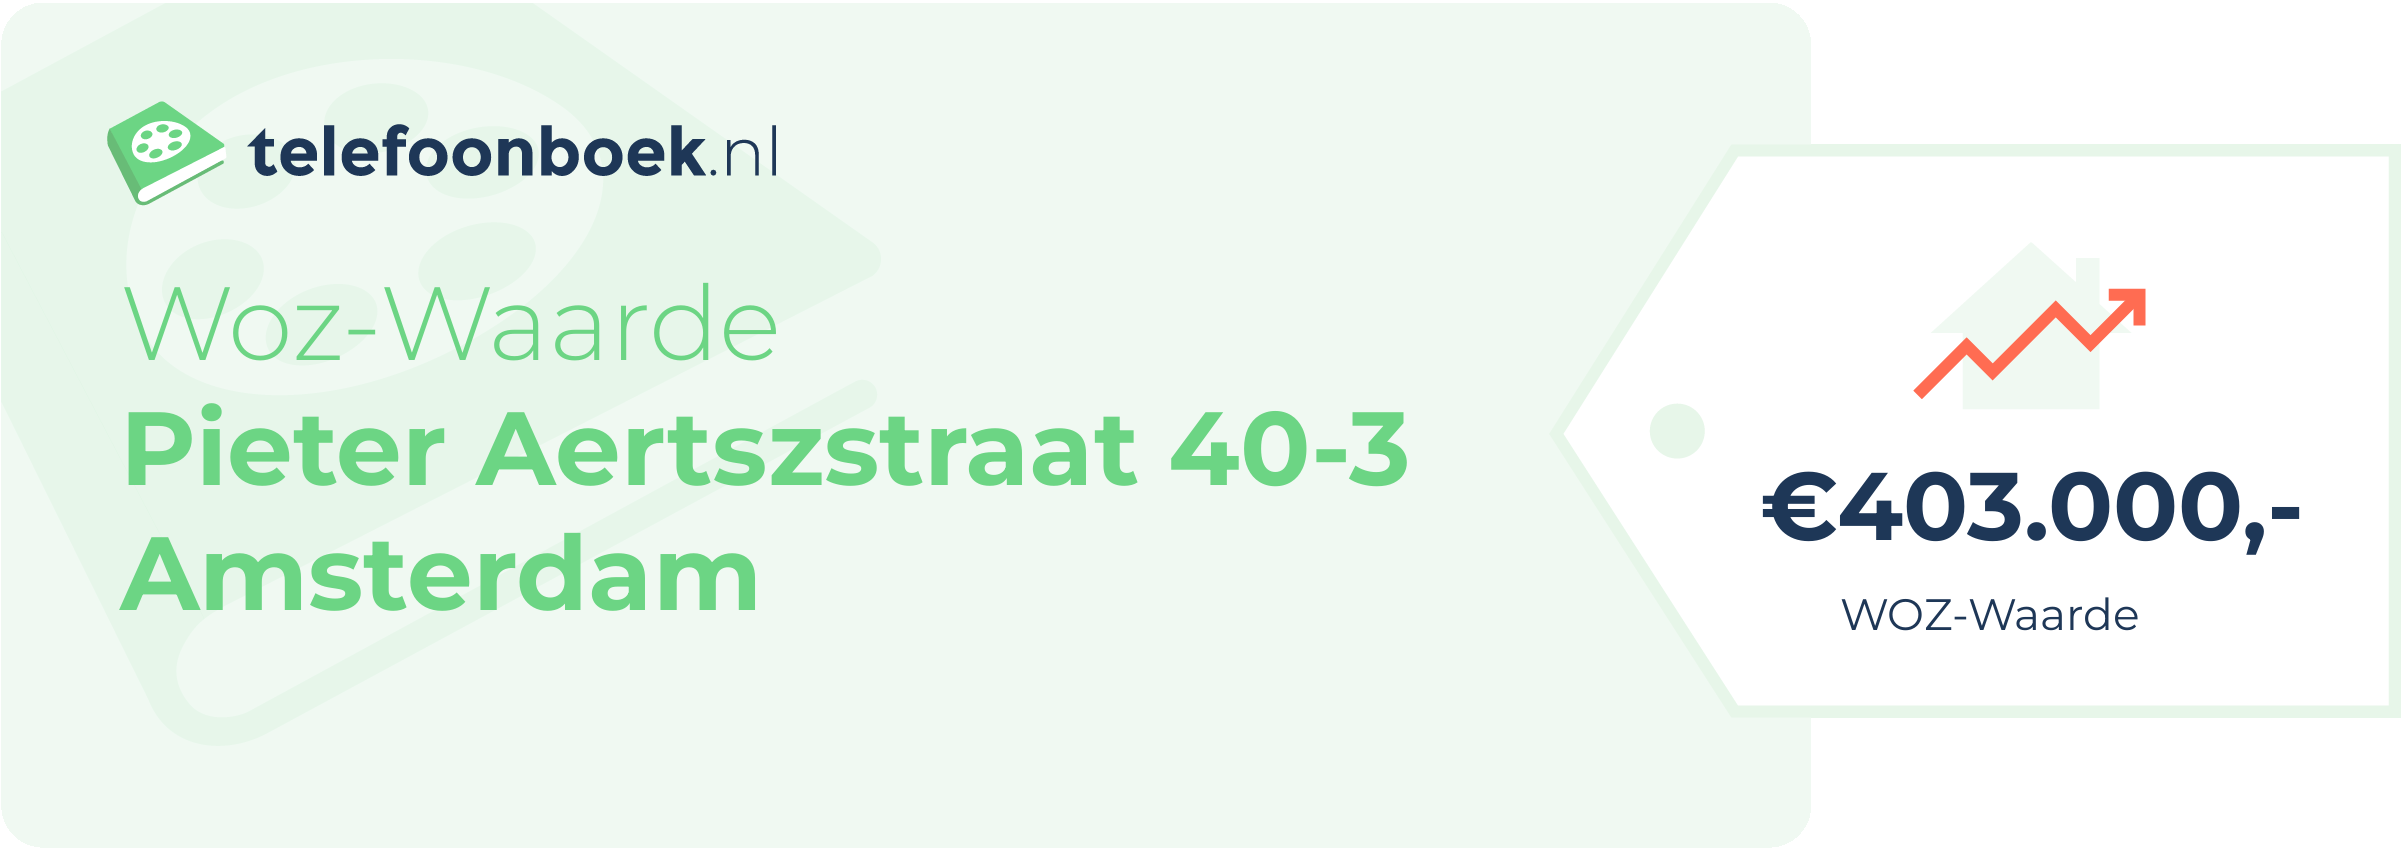 WOZ-waarde Pieter Aertszstraat 40-3 Amsterdam